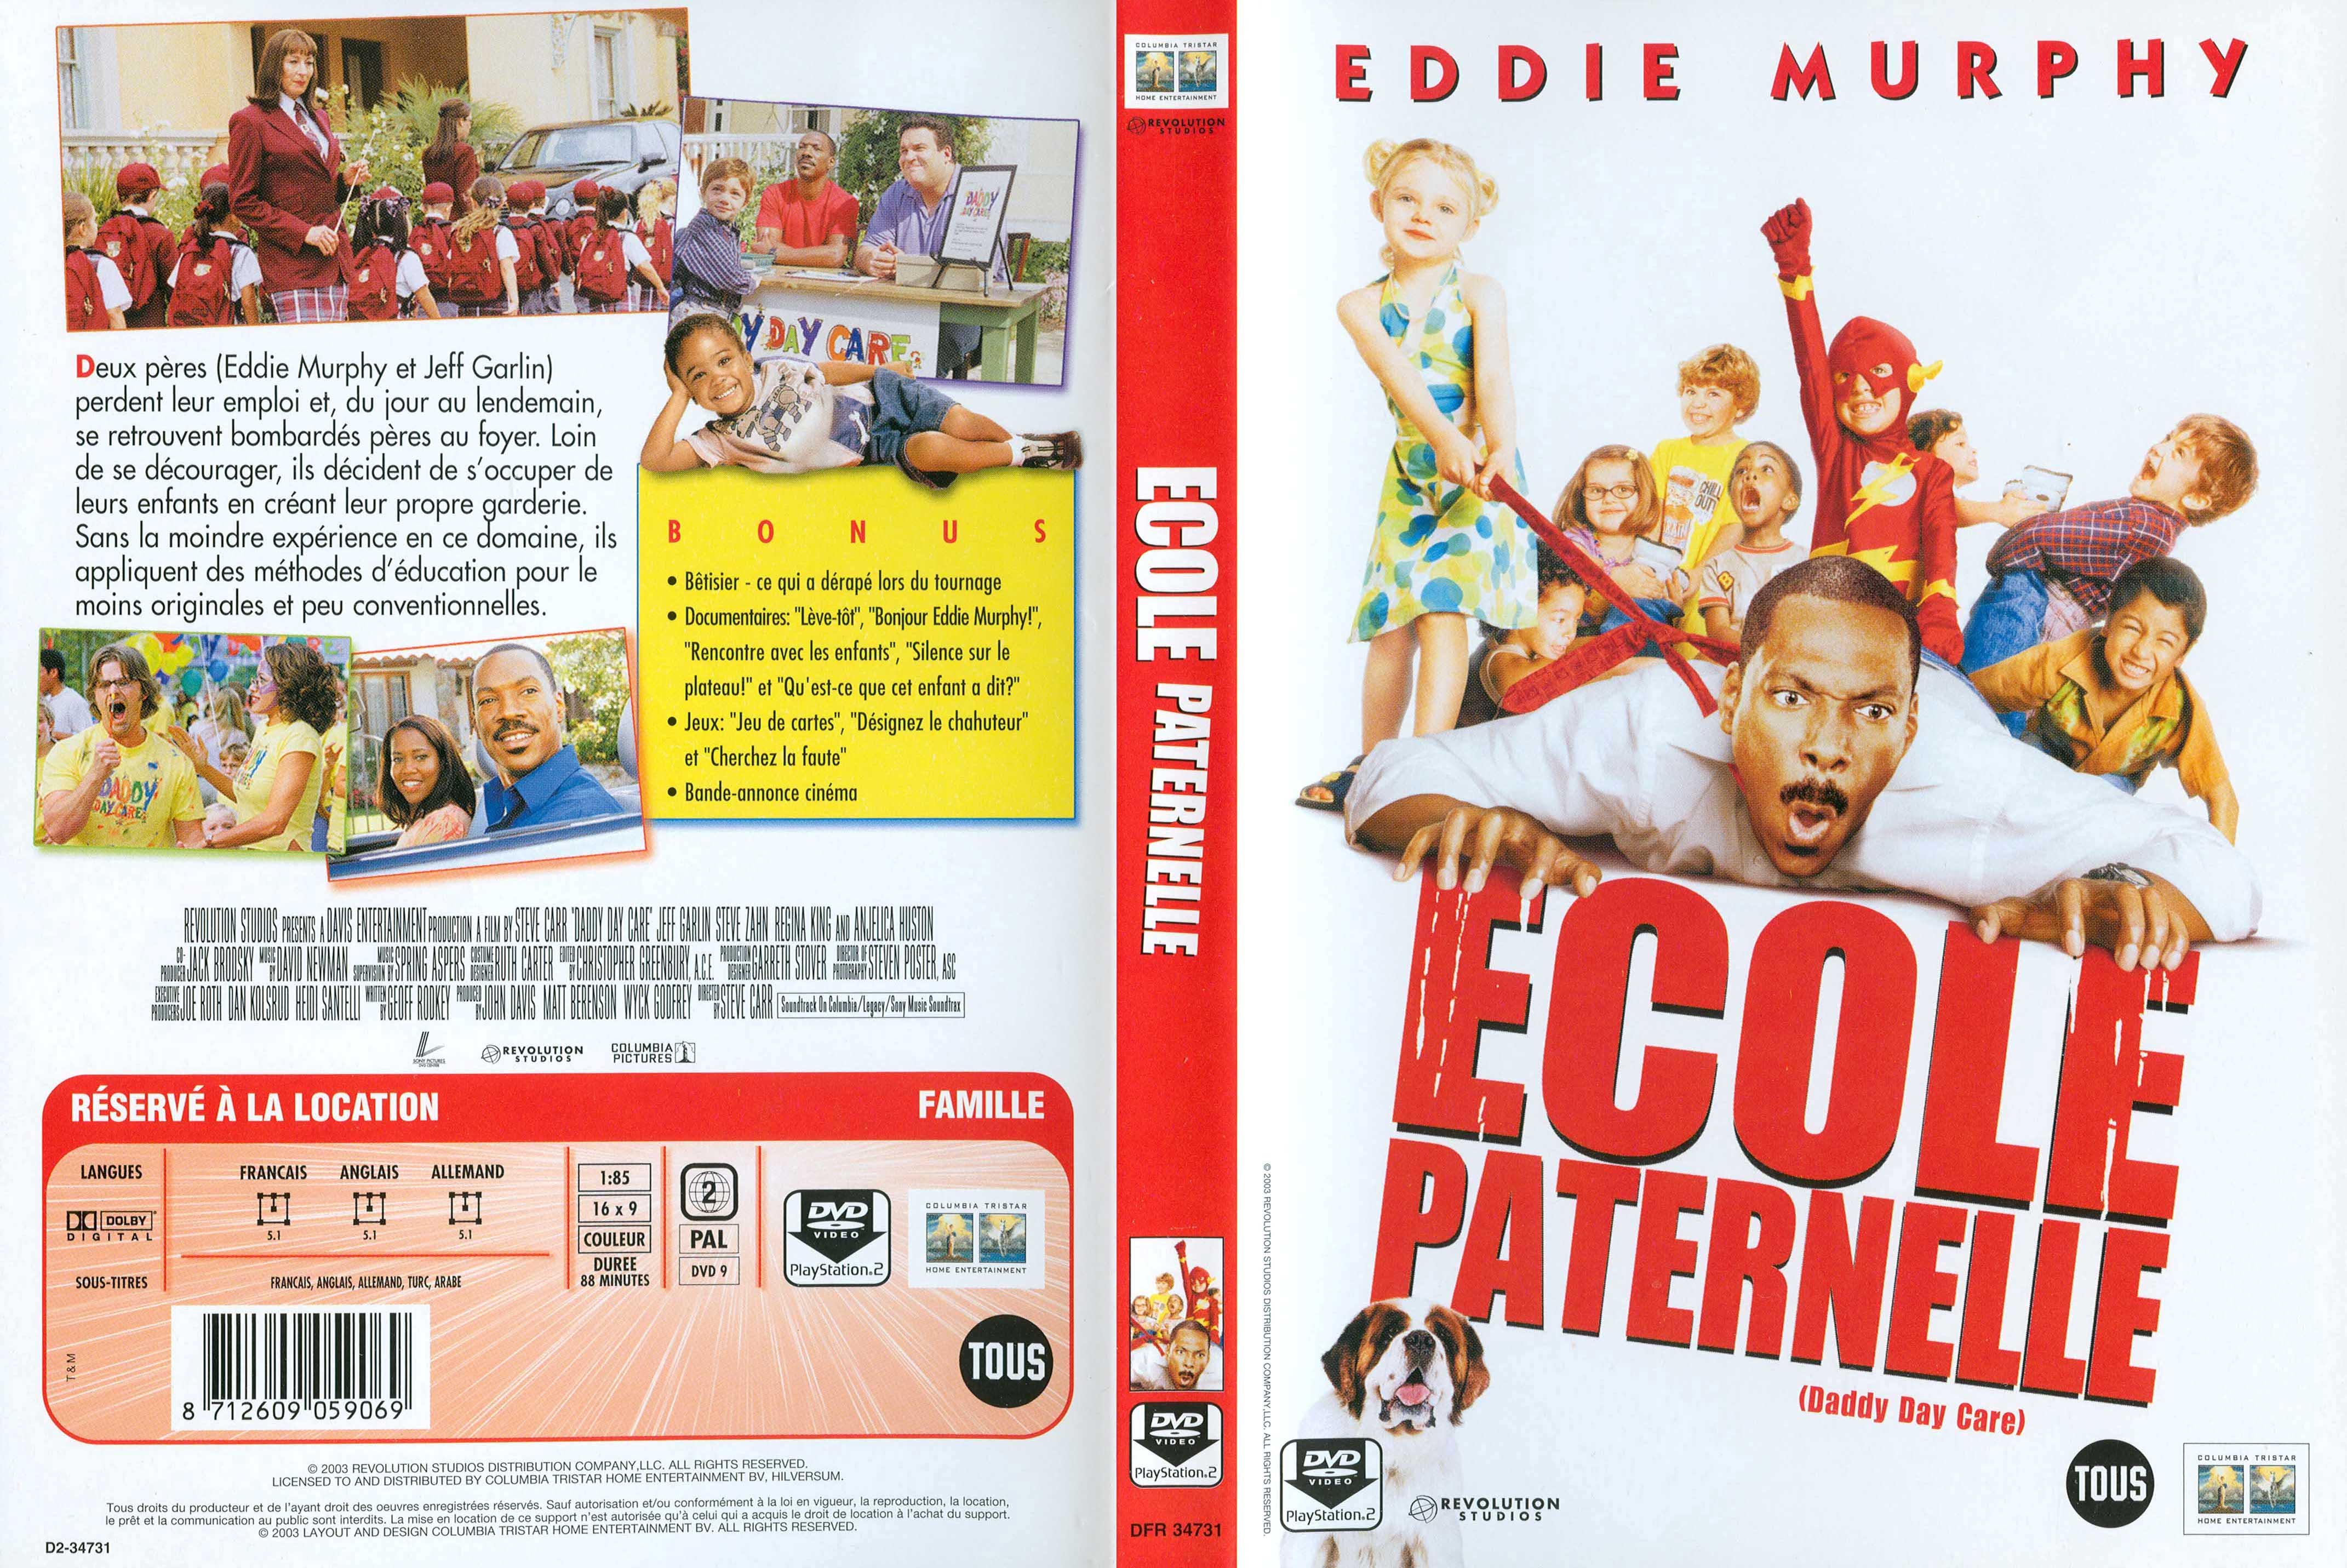 Jaquette DVD Ecole paternelle v2